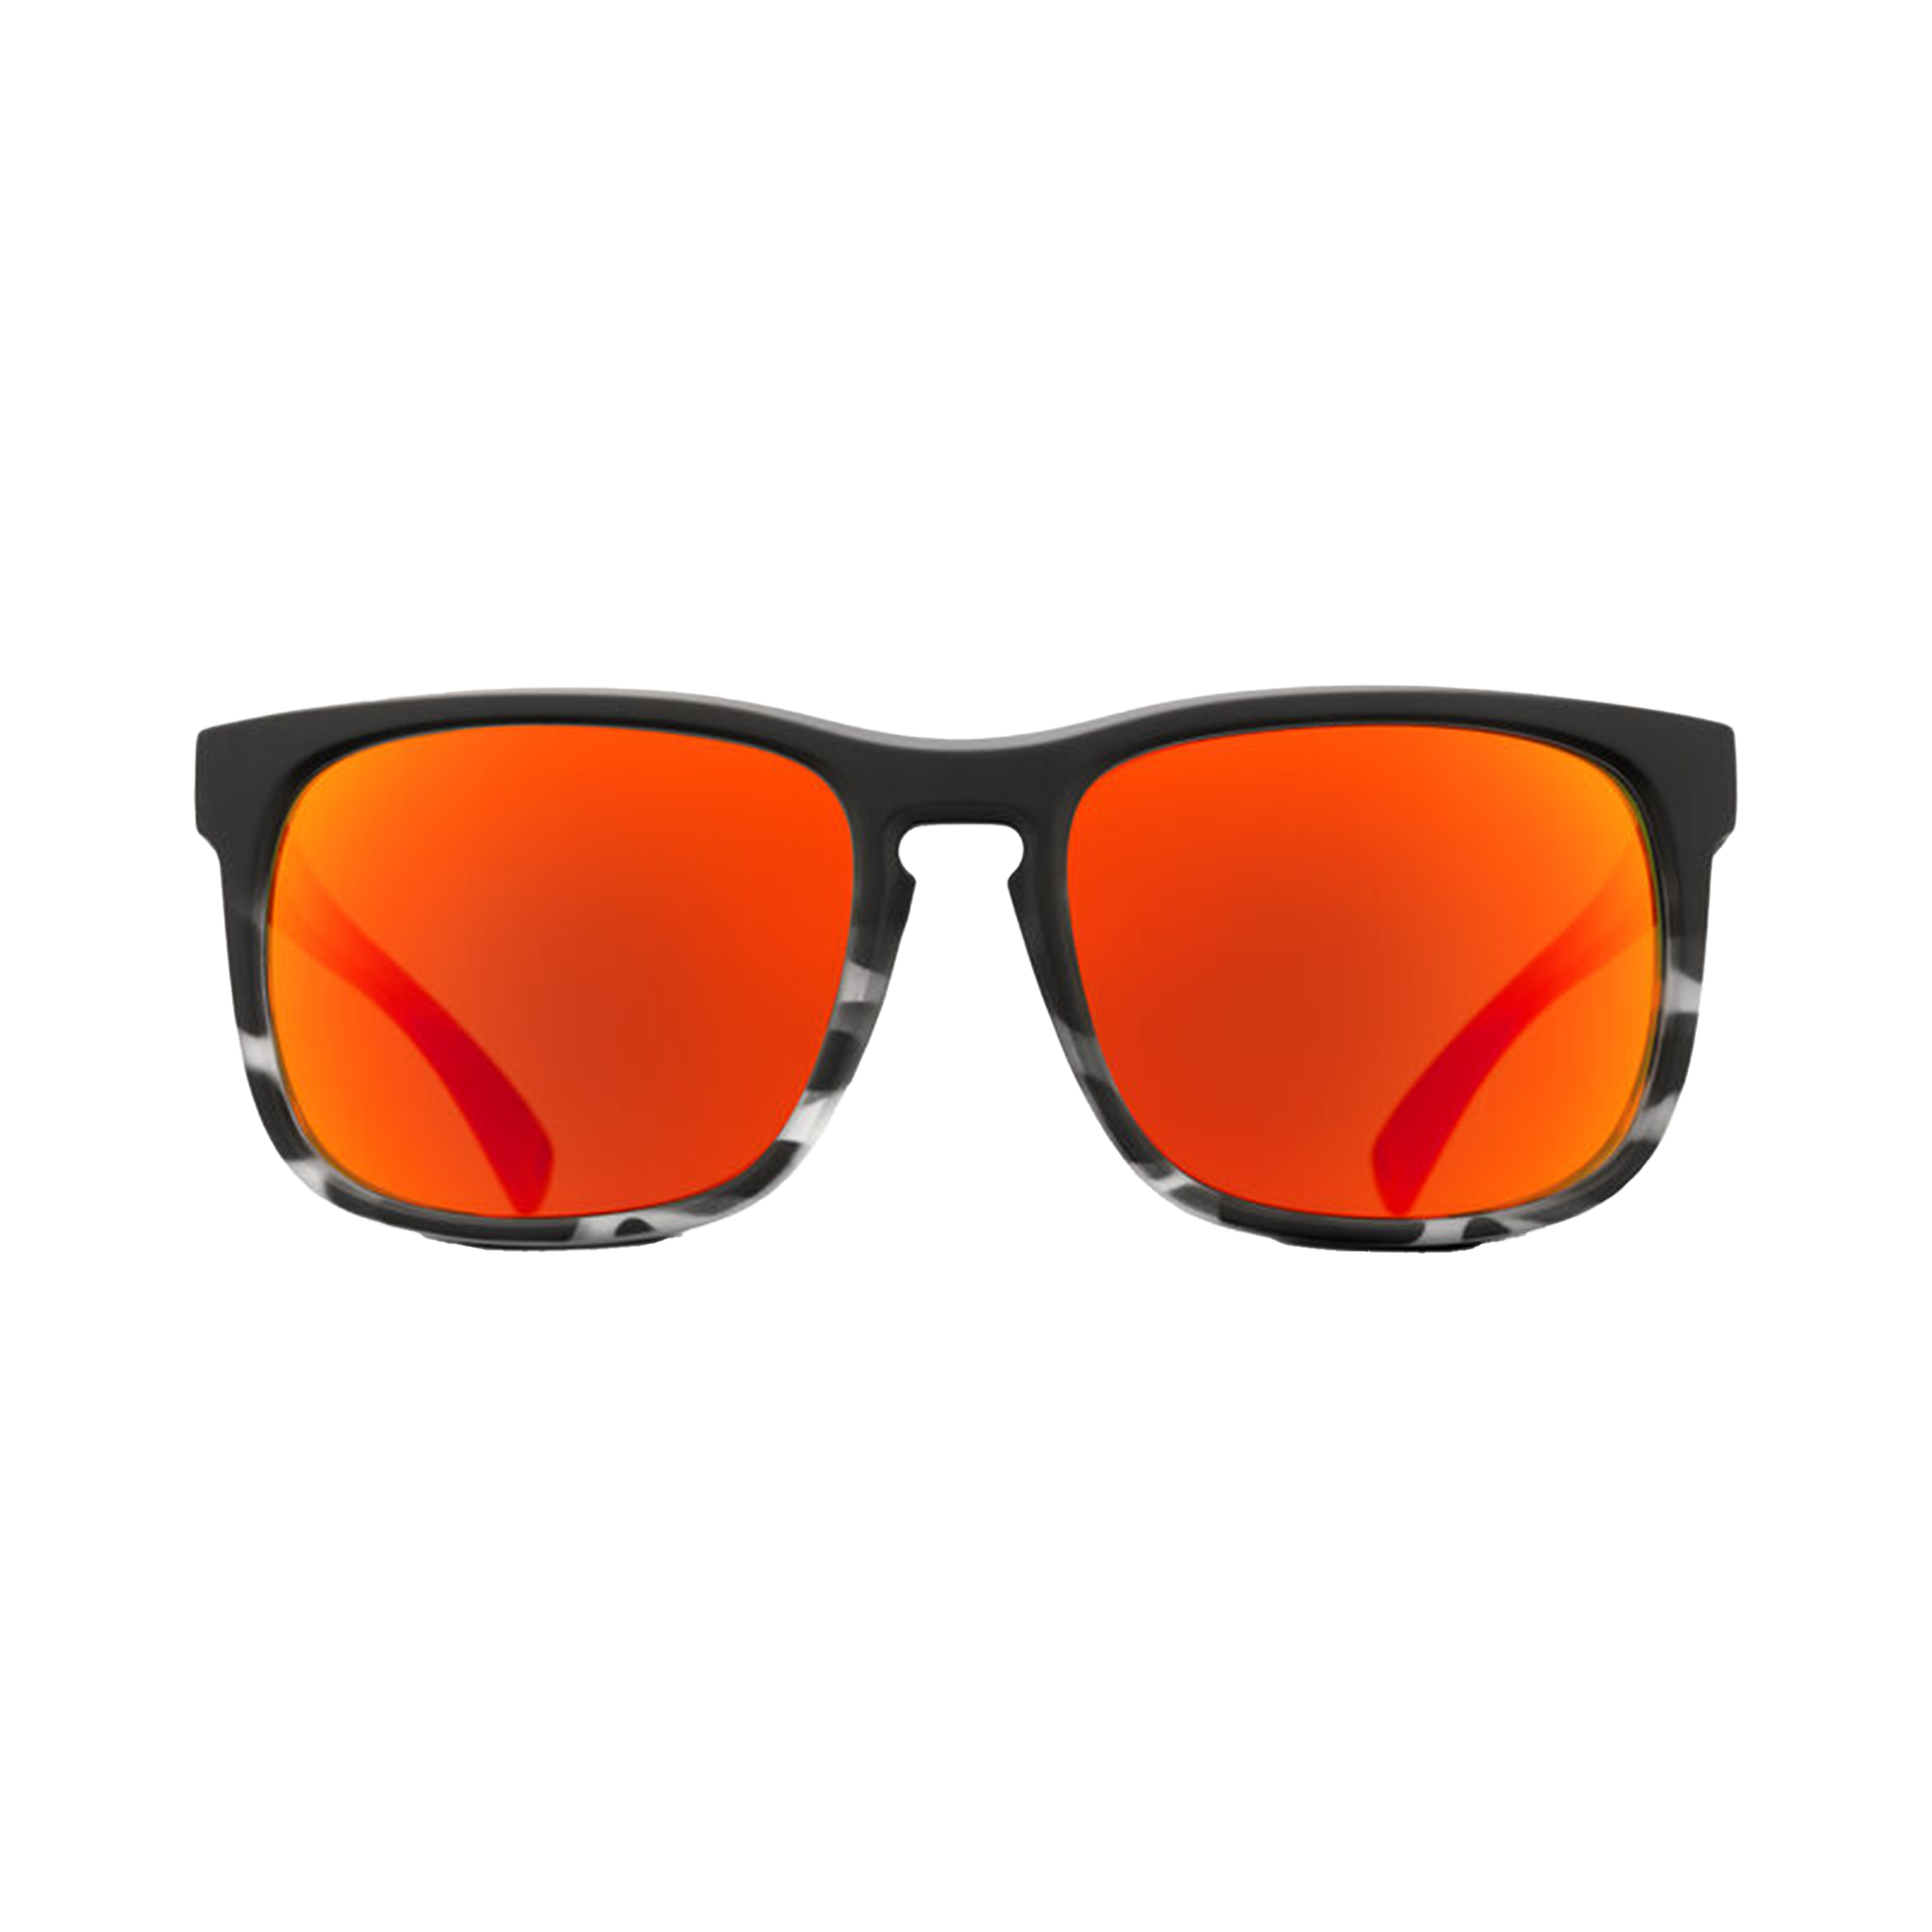 Giro Crest Sunglasses Matte Black Tortoise Fade VIVID Ember Sunglasses